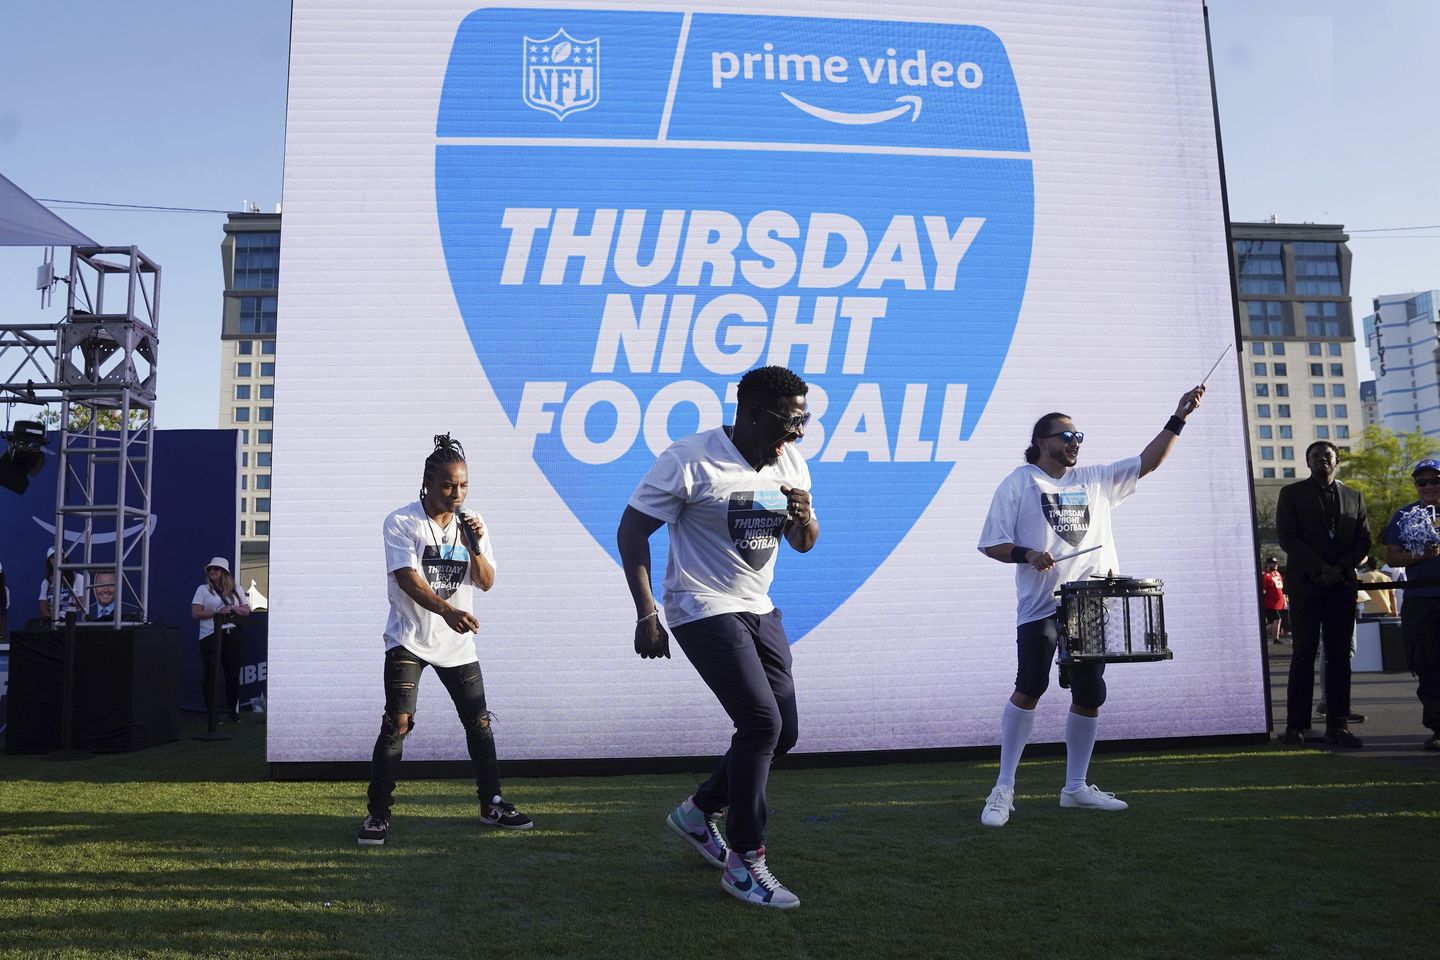 Prime Video promedia 15,3 millones de espectadores en su apertura de temporada de la NFL